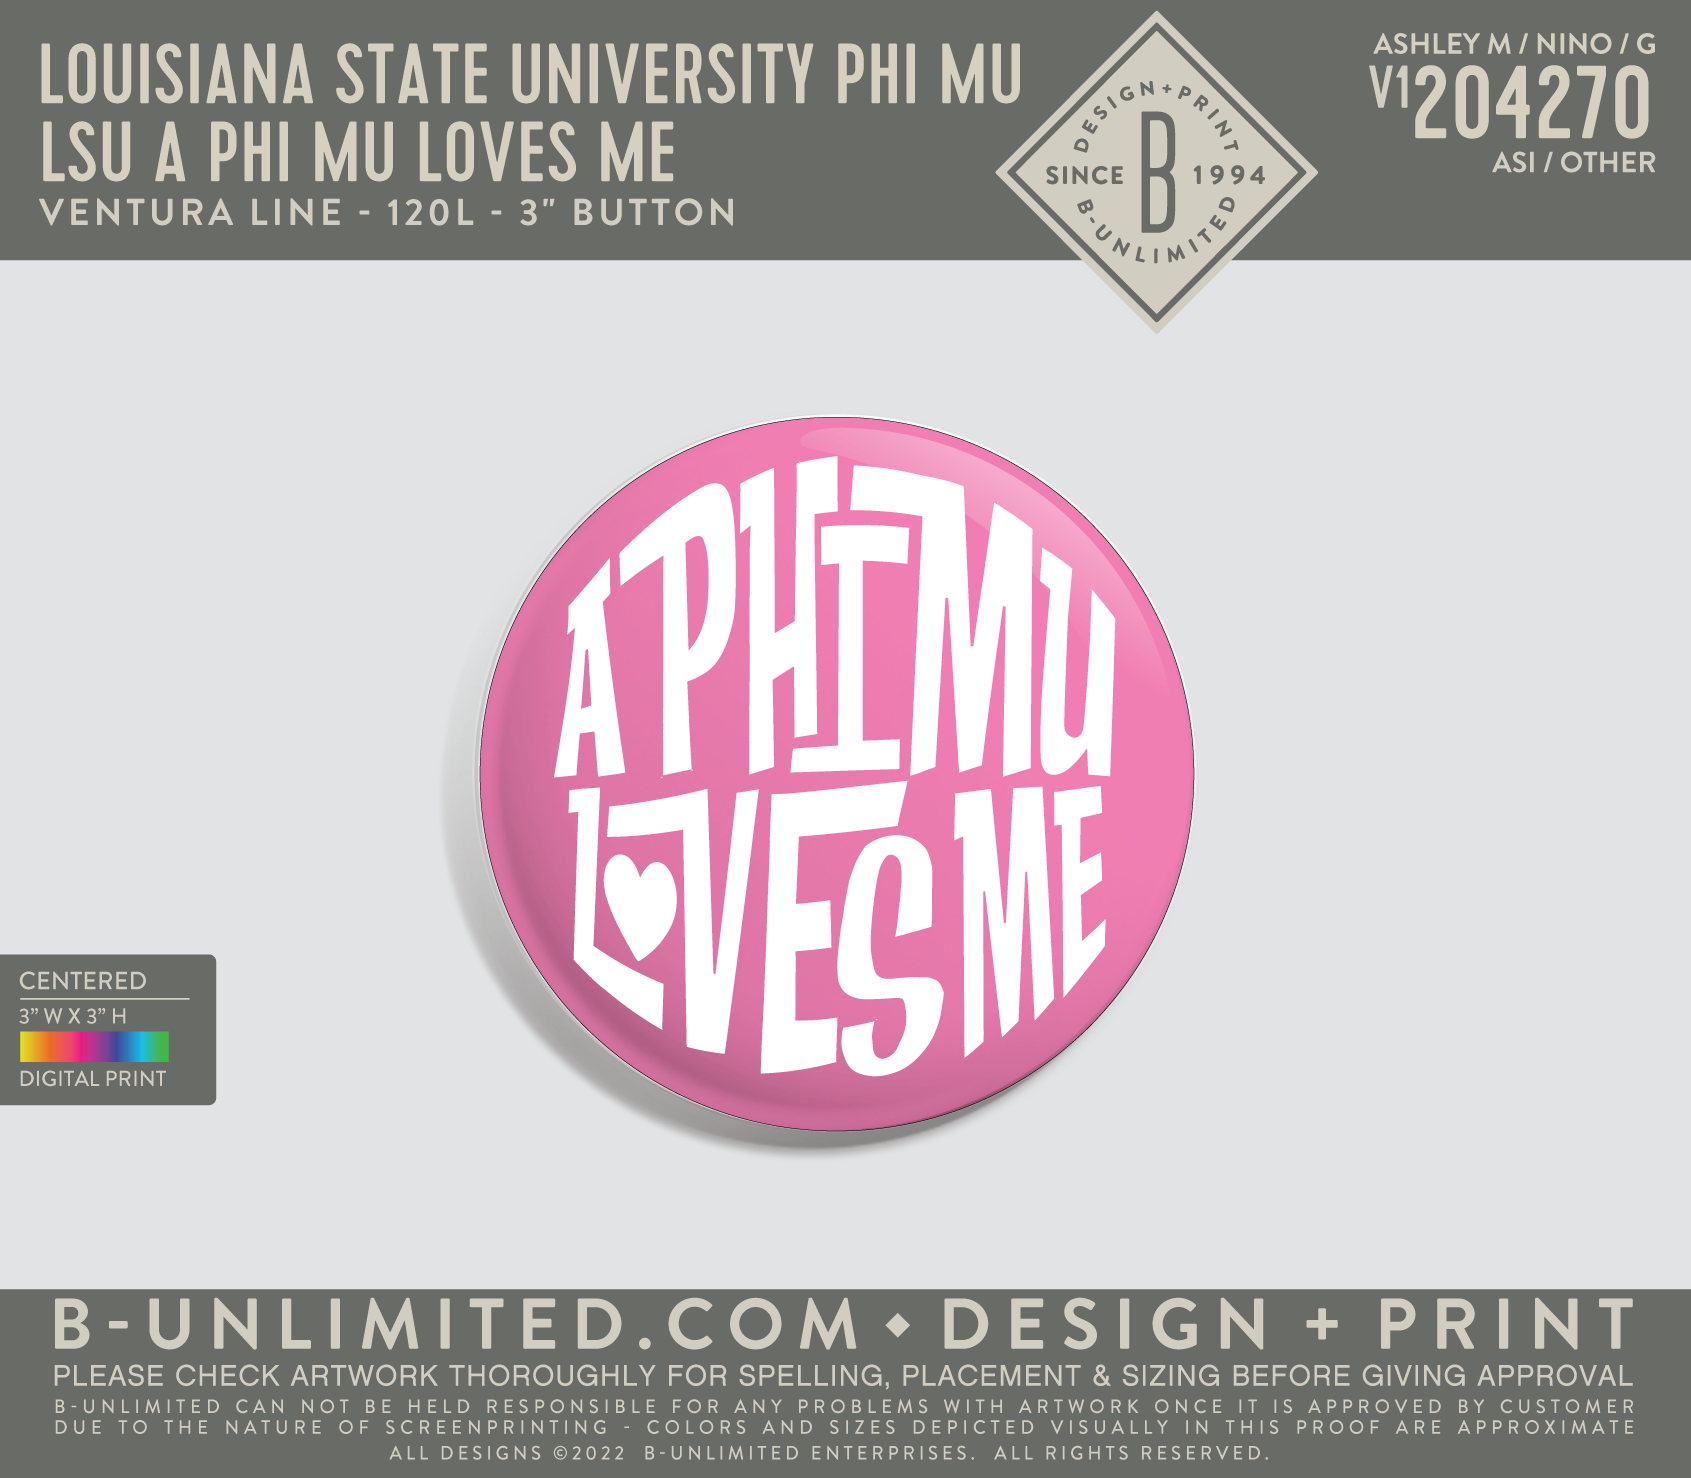 Louisiana State University Phi Mu - LSU A Phi Mu Loves Me (Buttons) - Ventura Line - 120L - 3" Button - White